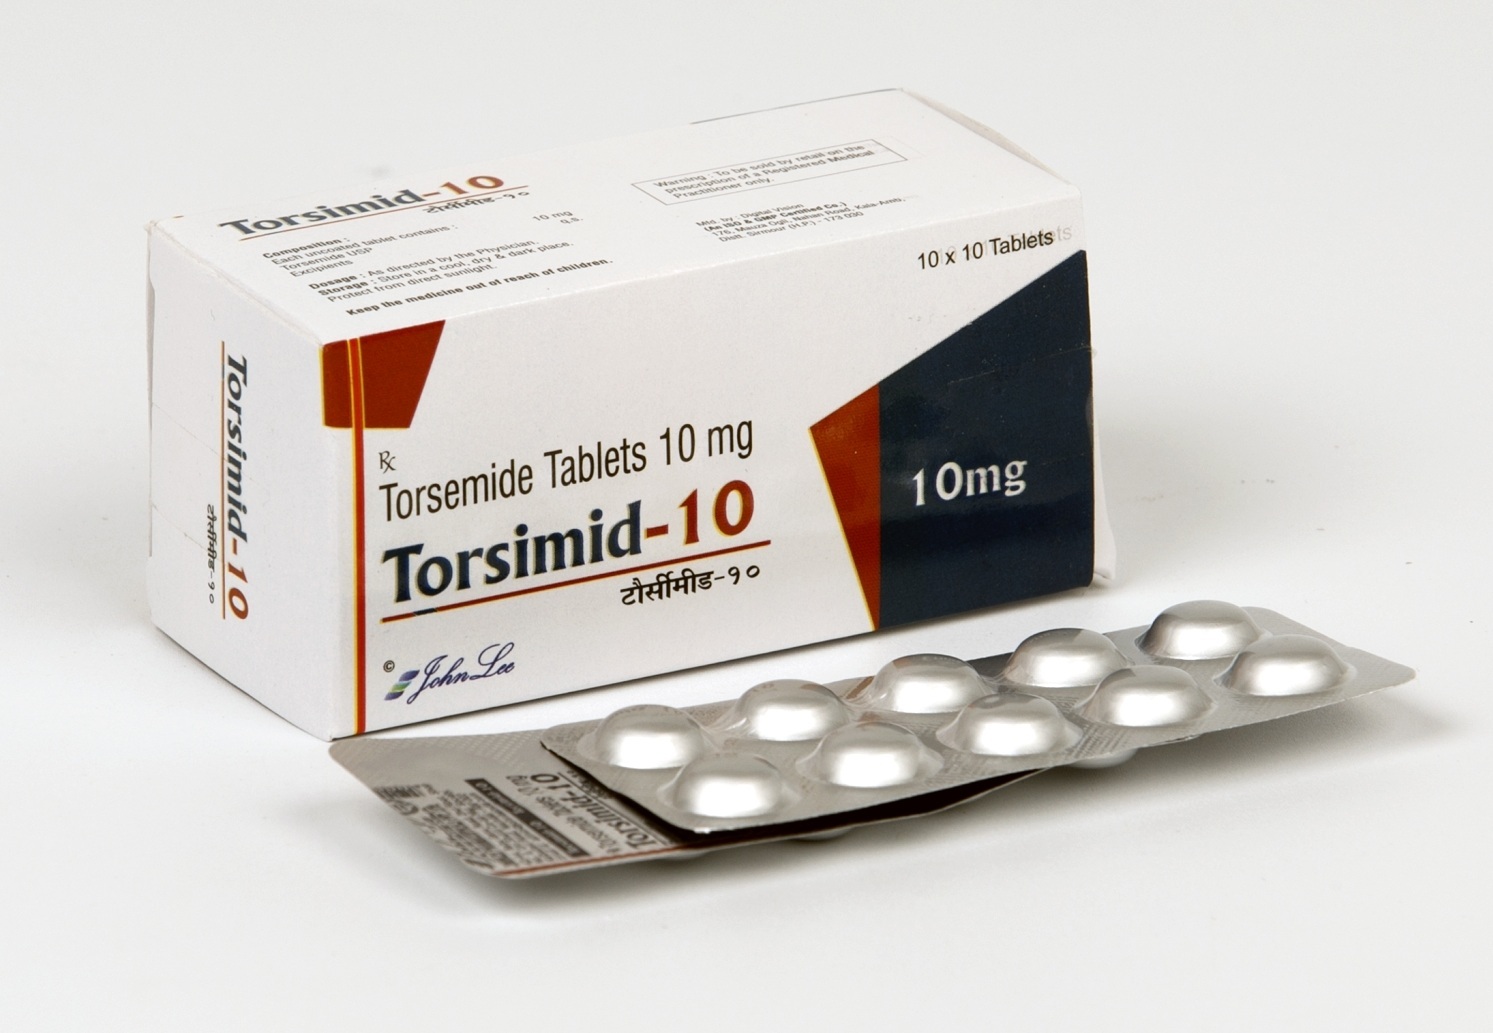 Torsemide Tablets